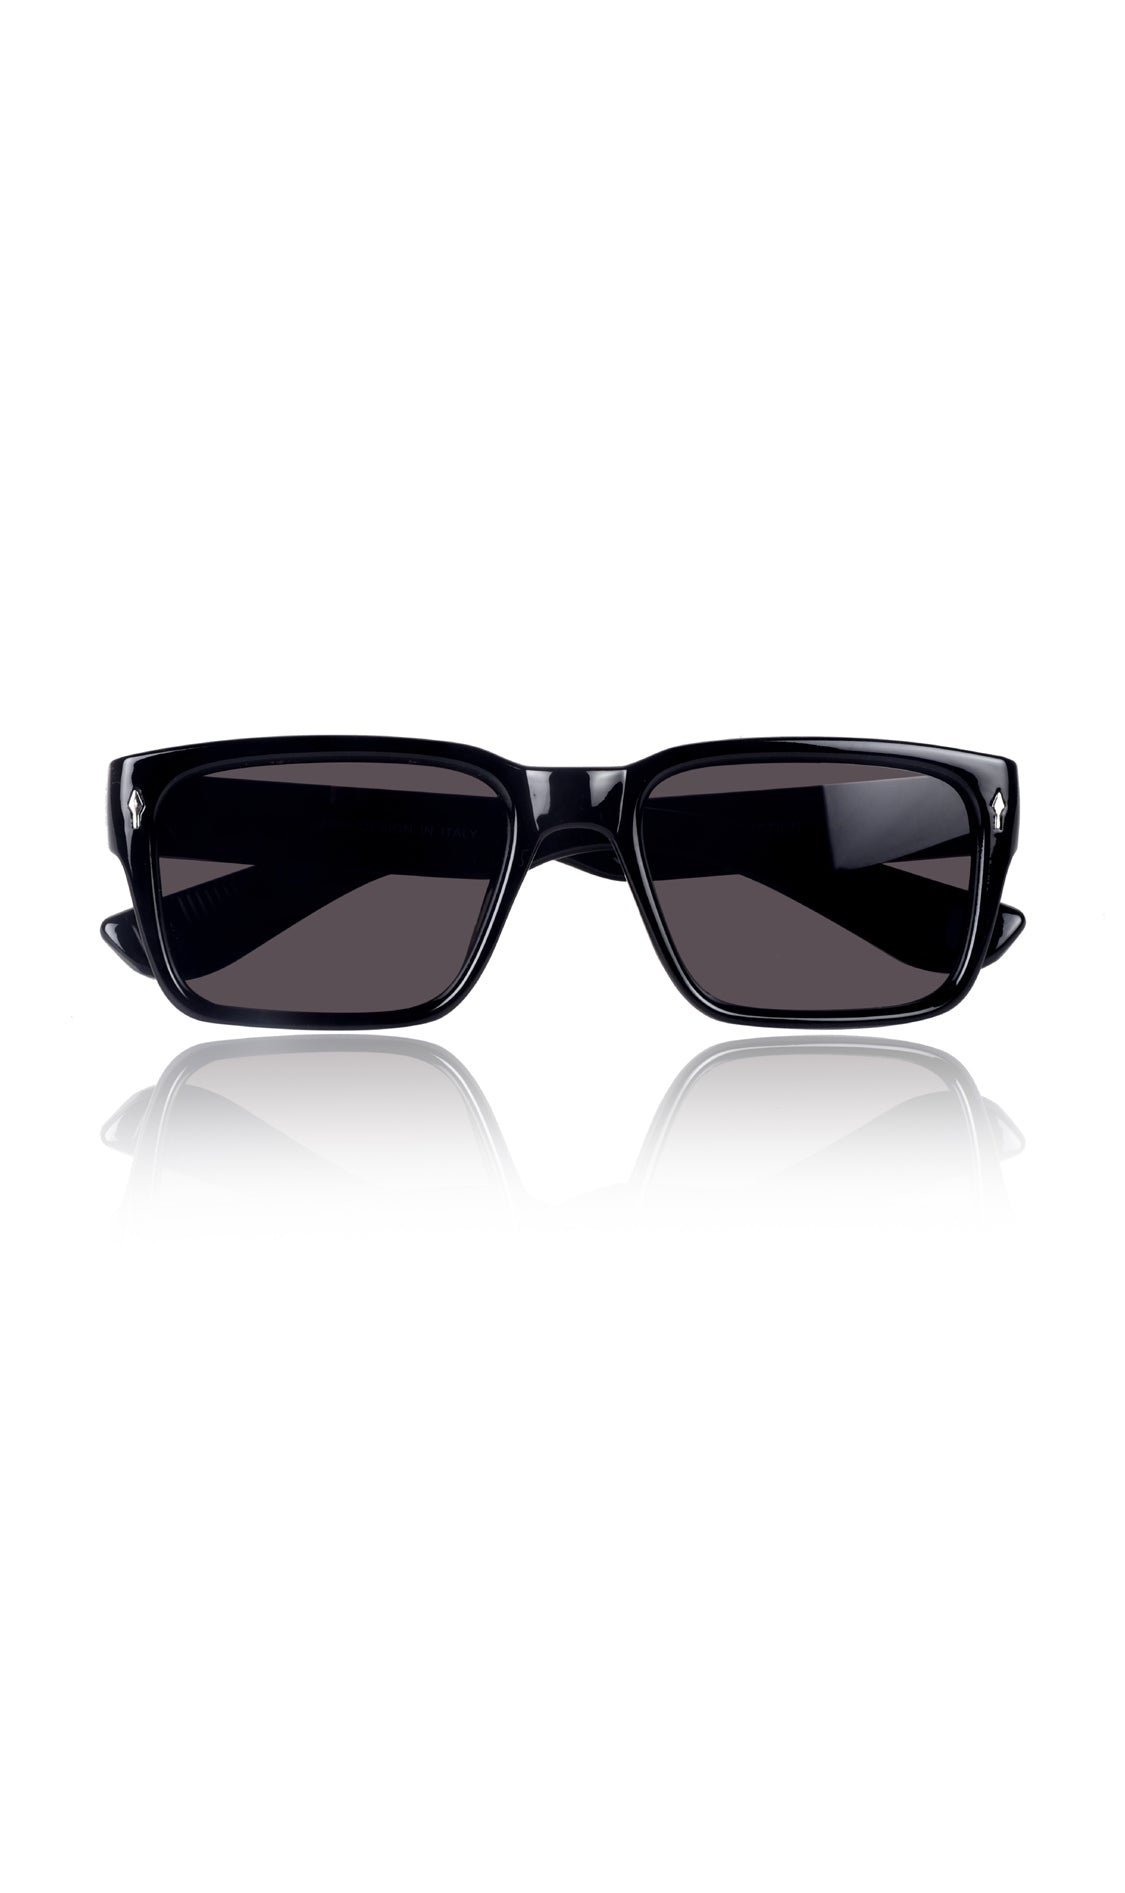 Jodykoes® Premium Series Rectangle UV Protection Sunglasses | Fashionable Sun Shades Comfortable Eyewear Eyeglasses for Men and Women (Black) - Jodykoes ®